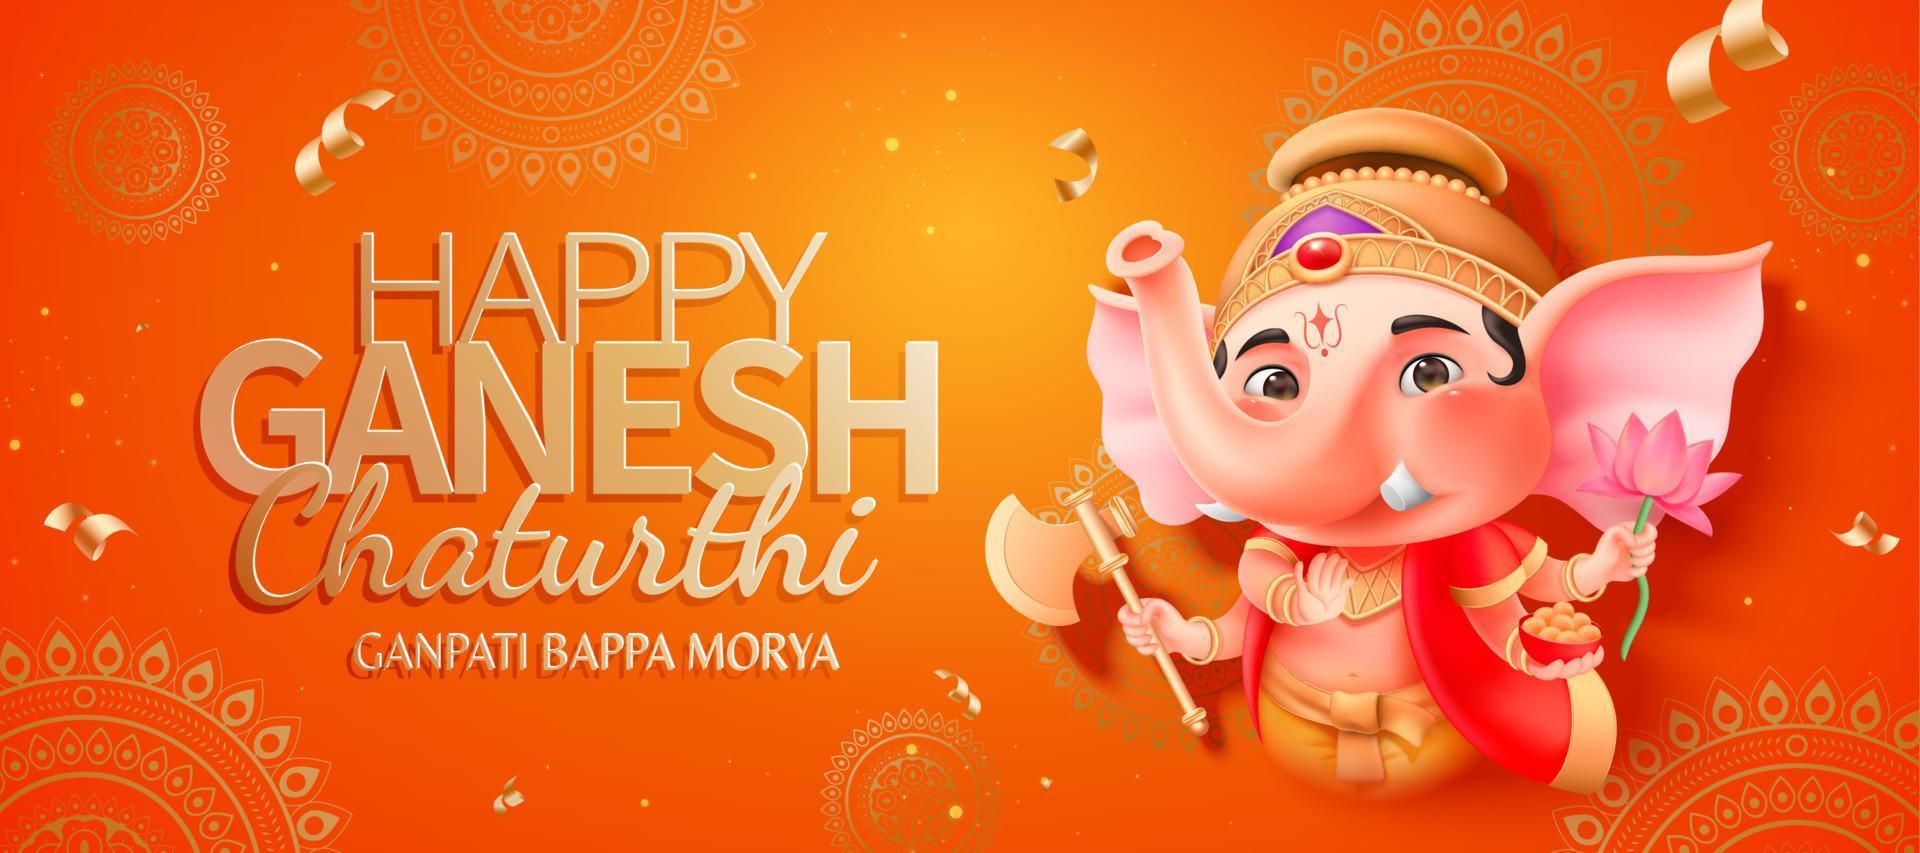 Lovely chubby Ganesha holding gulab, lotus and axe on orange mandala banner vector